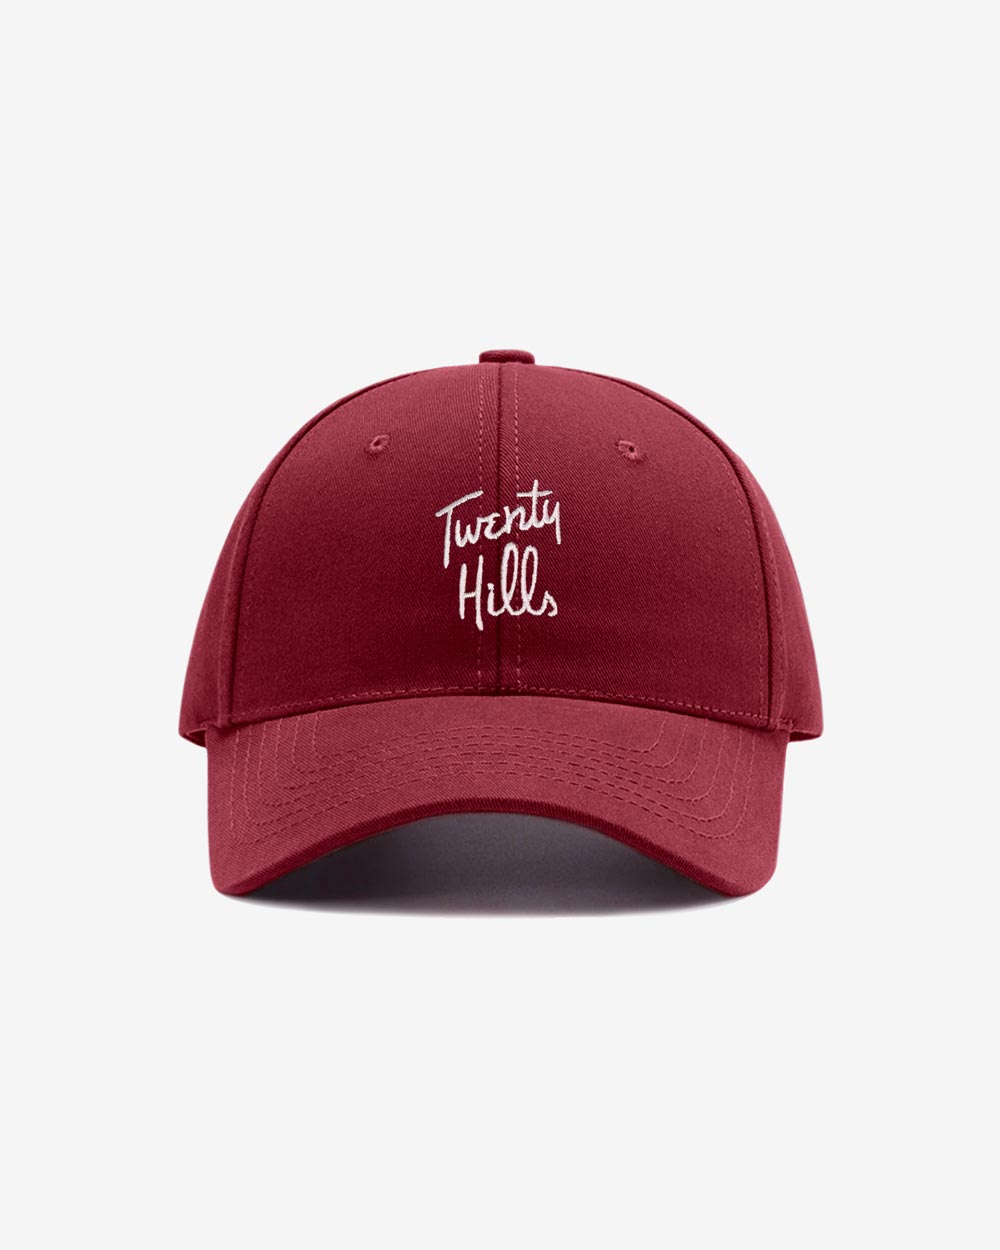 Twenty Hills Cap (Cherry Red)